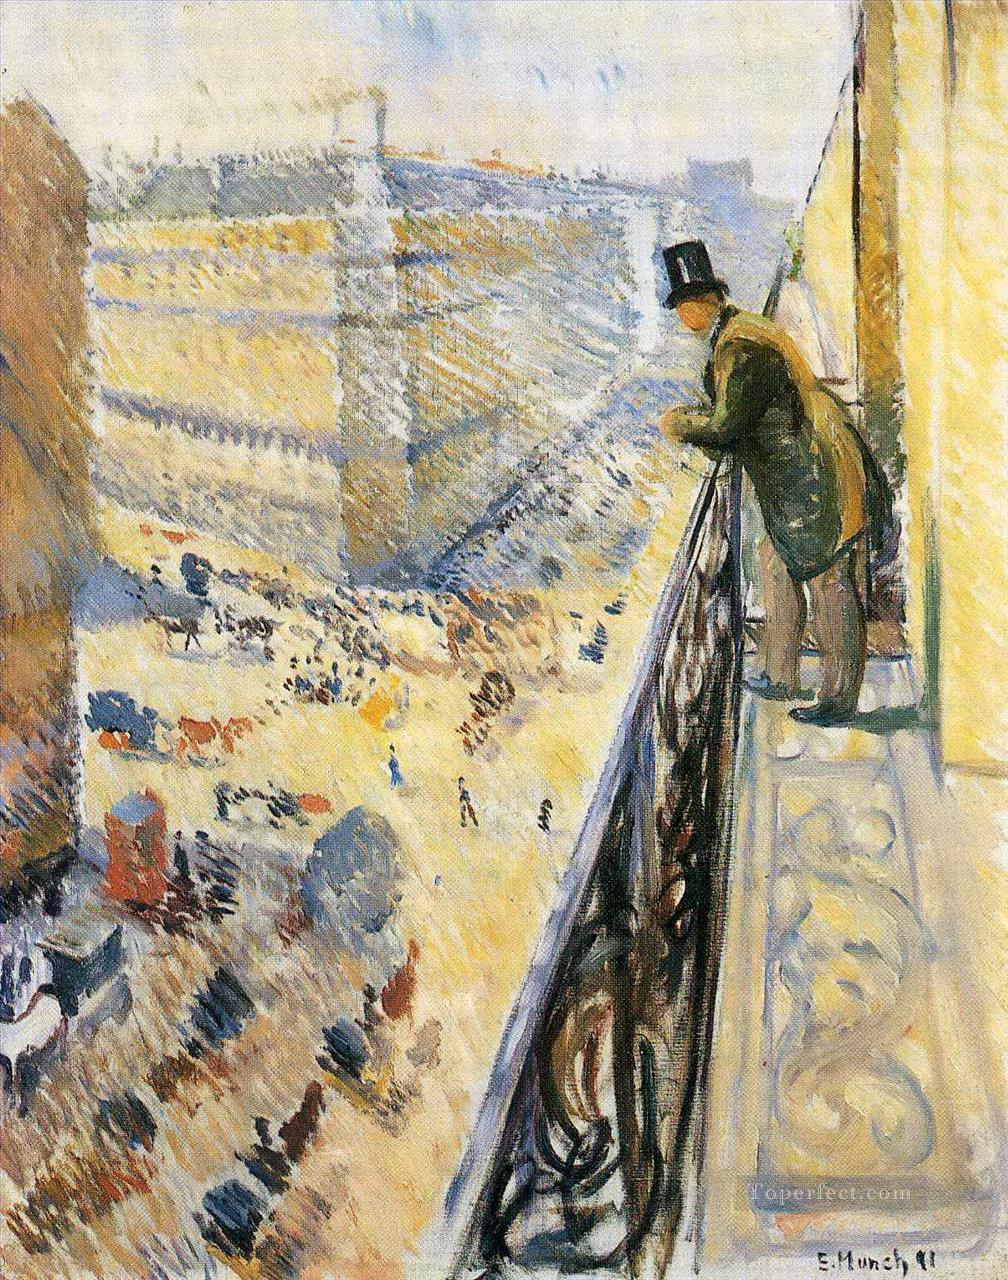 Calle Lafayette Edvard Munch calle lafayette 1891 parisina Pintura al óleo